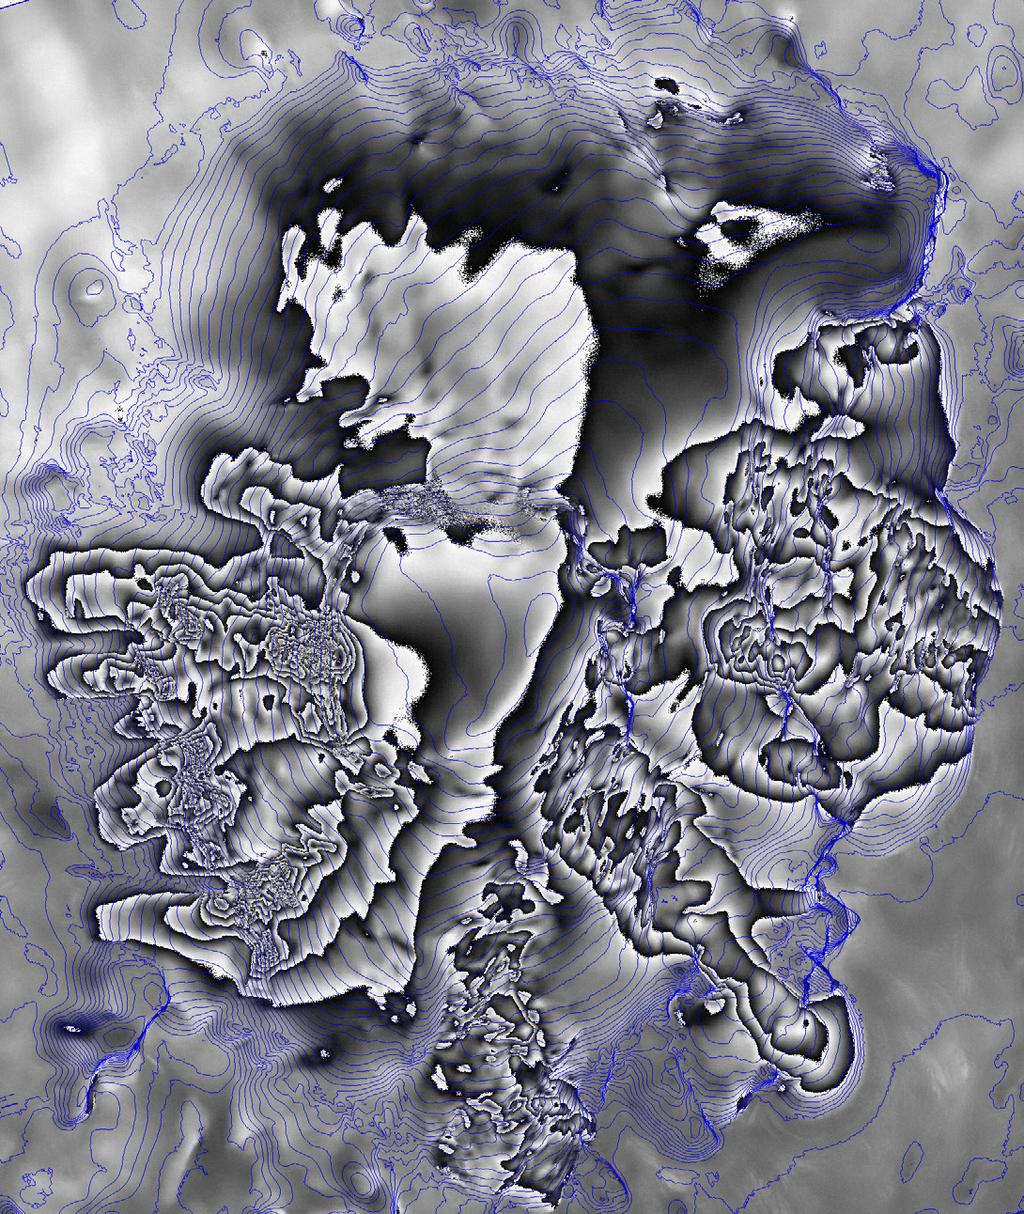 Þjorsarjökull is located on the eastern side of Hofsjökull ice cap, north of Múlajökull.